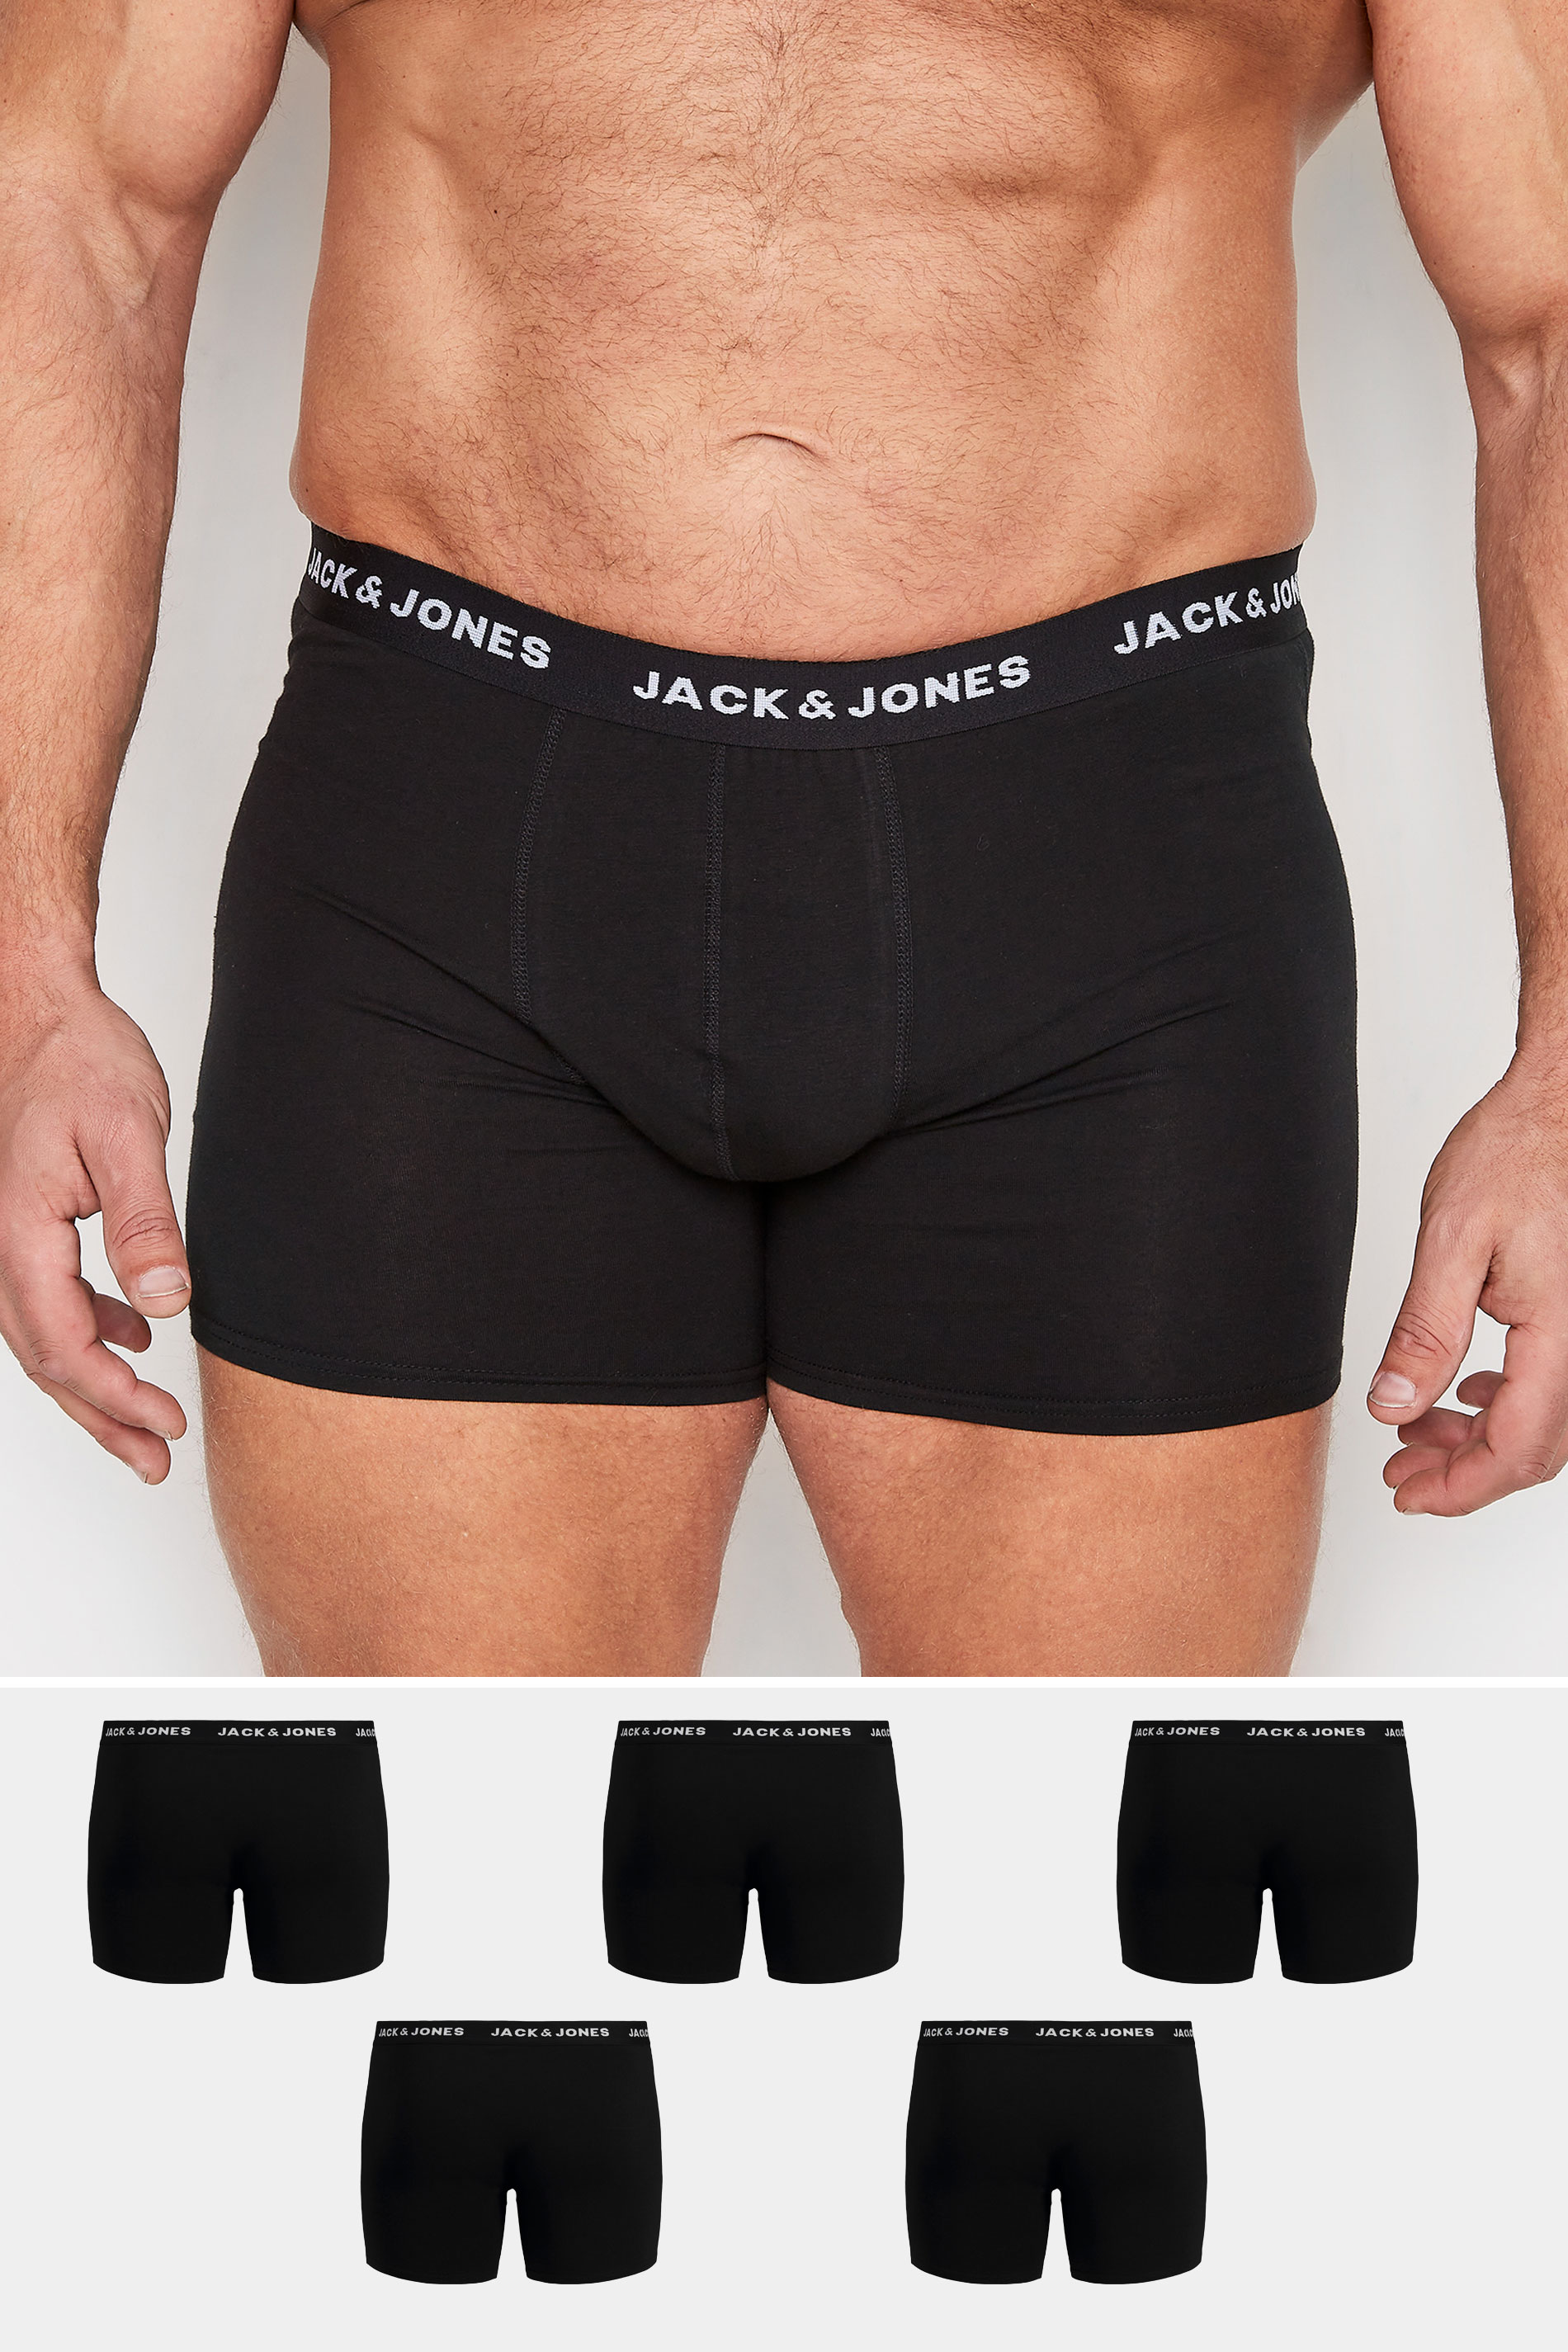 JACK & JONES 5 PACK Black Boxers | BadRhino 1